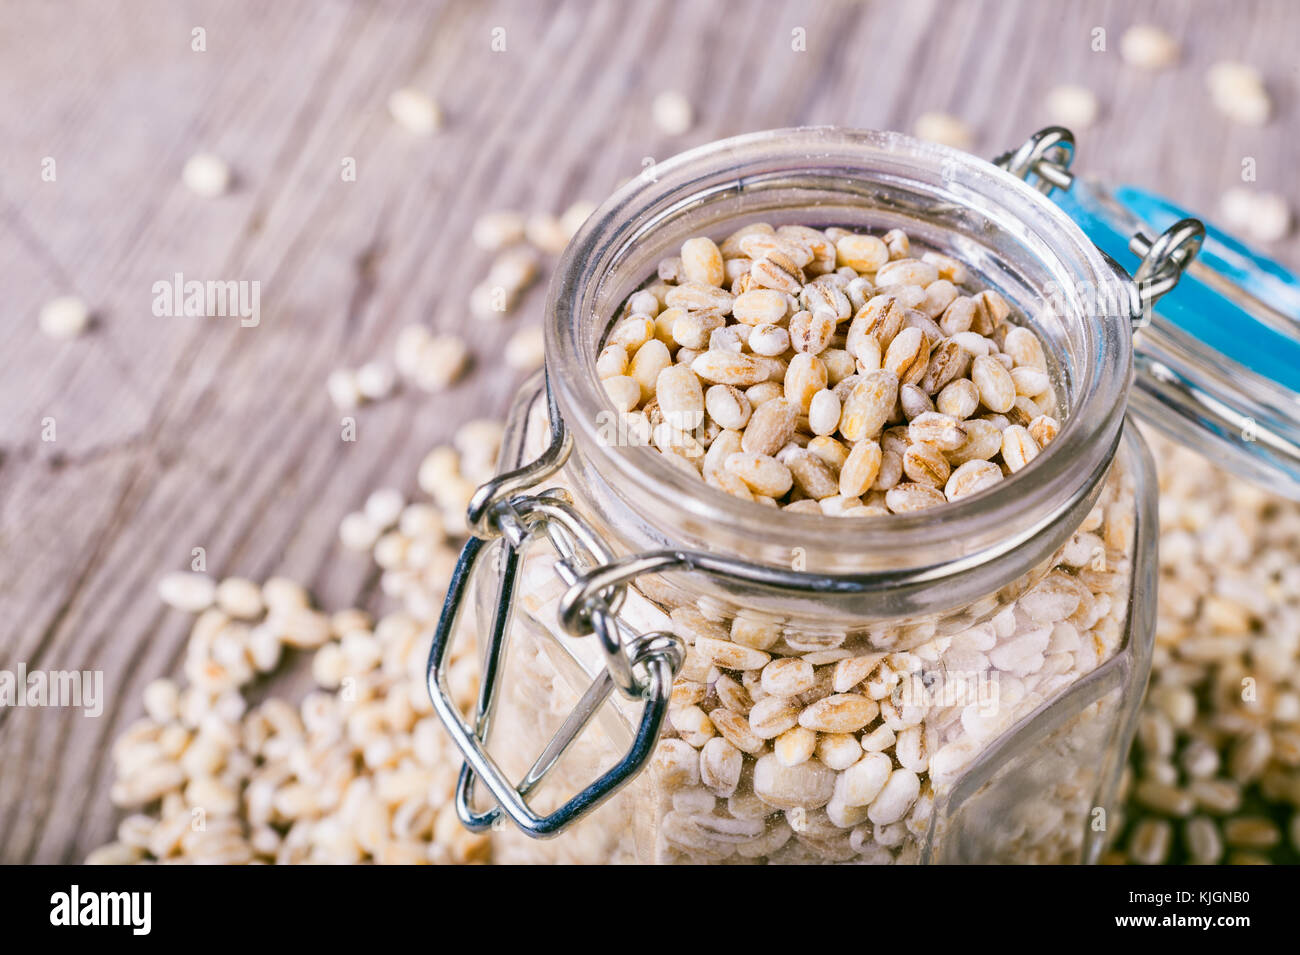 Pearl barley grains in a glass jar Stock Photo